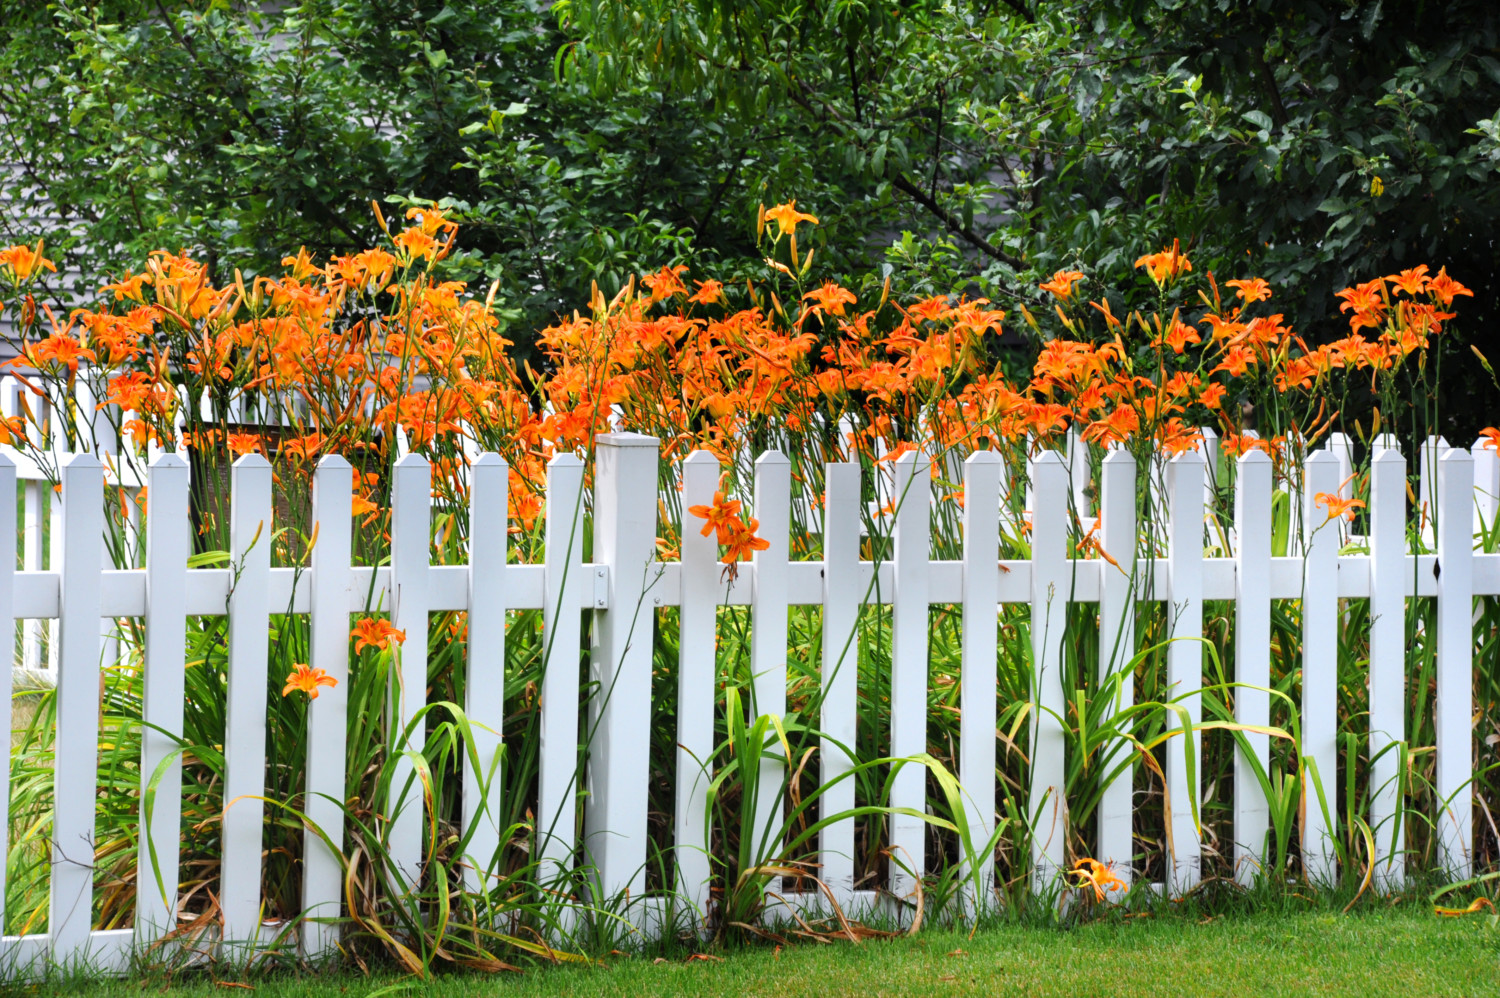 Orange day lilies overgrow a garden fence